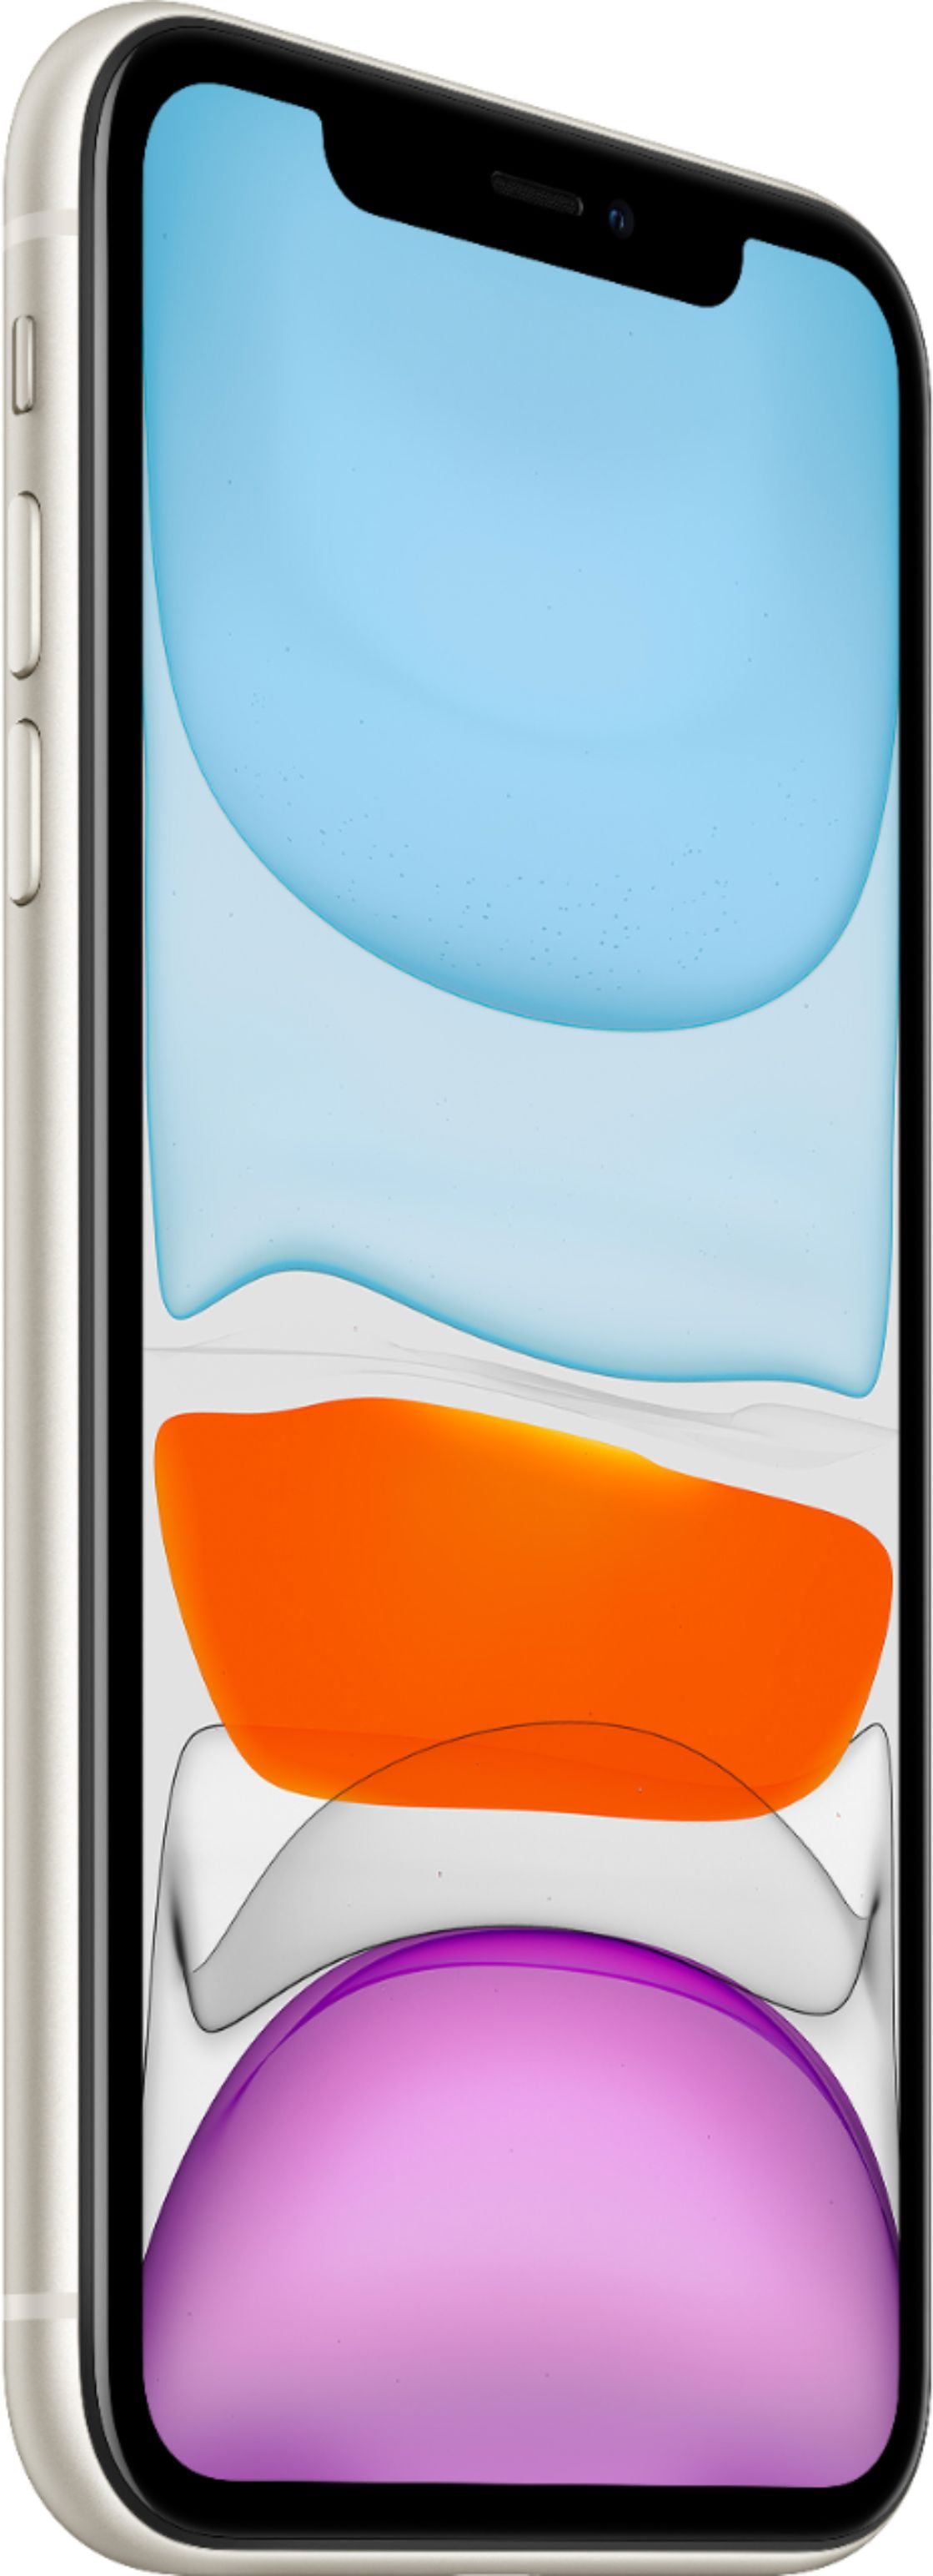 Apple iPhone 11, US Version, 256GB, White - Unlocked (Renewed) : Cell  Phones & Accessories 